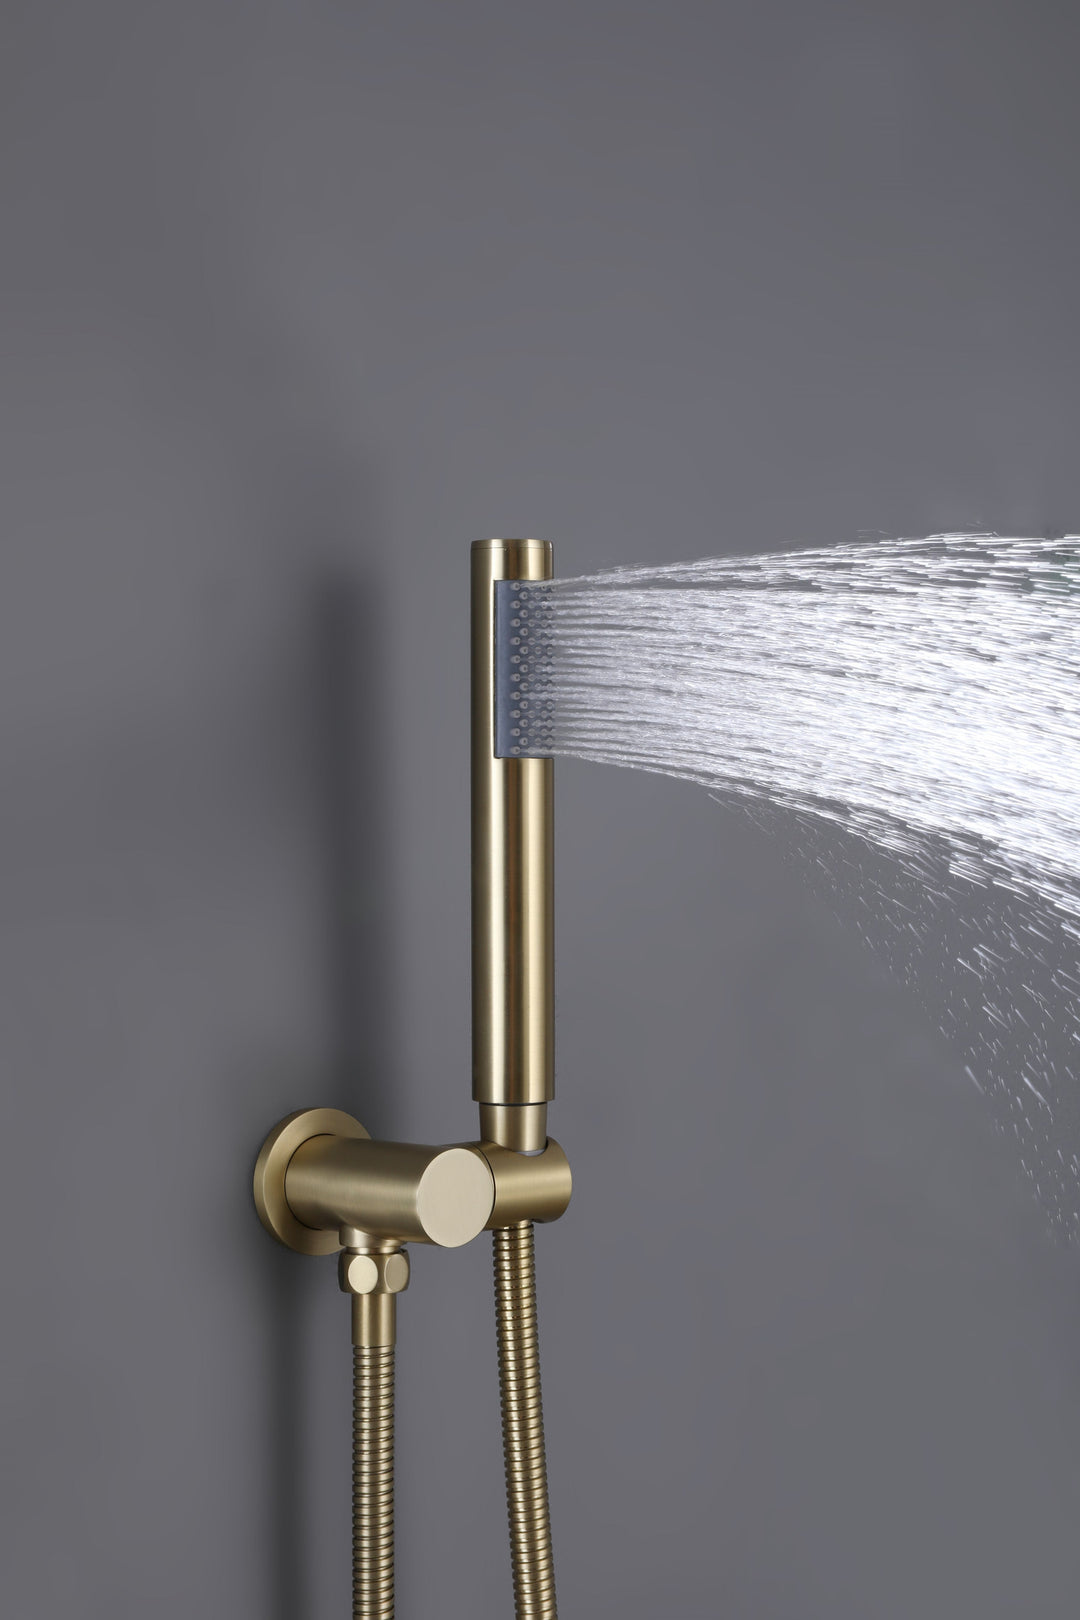 10 inch Tub Shower Faucet Set Complete Rain Shower System with Tub Spout